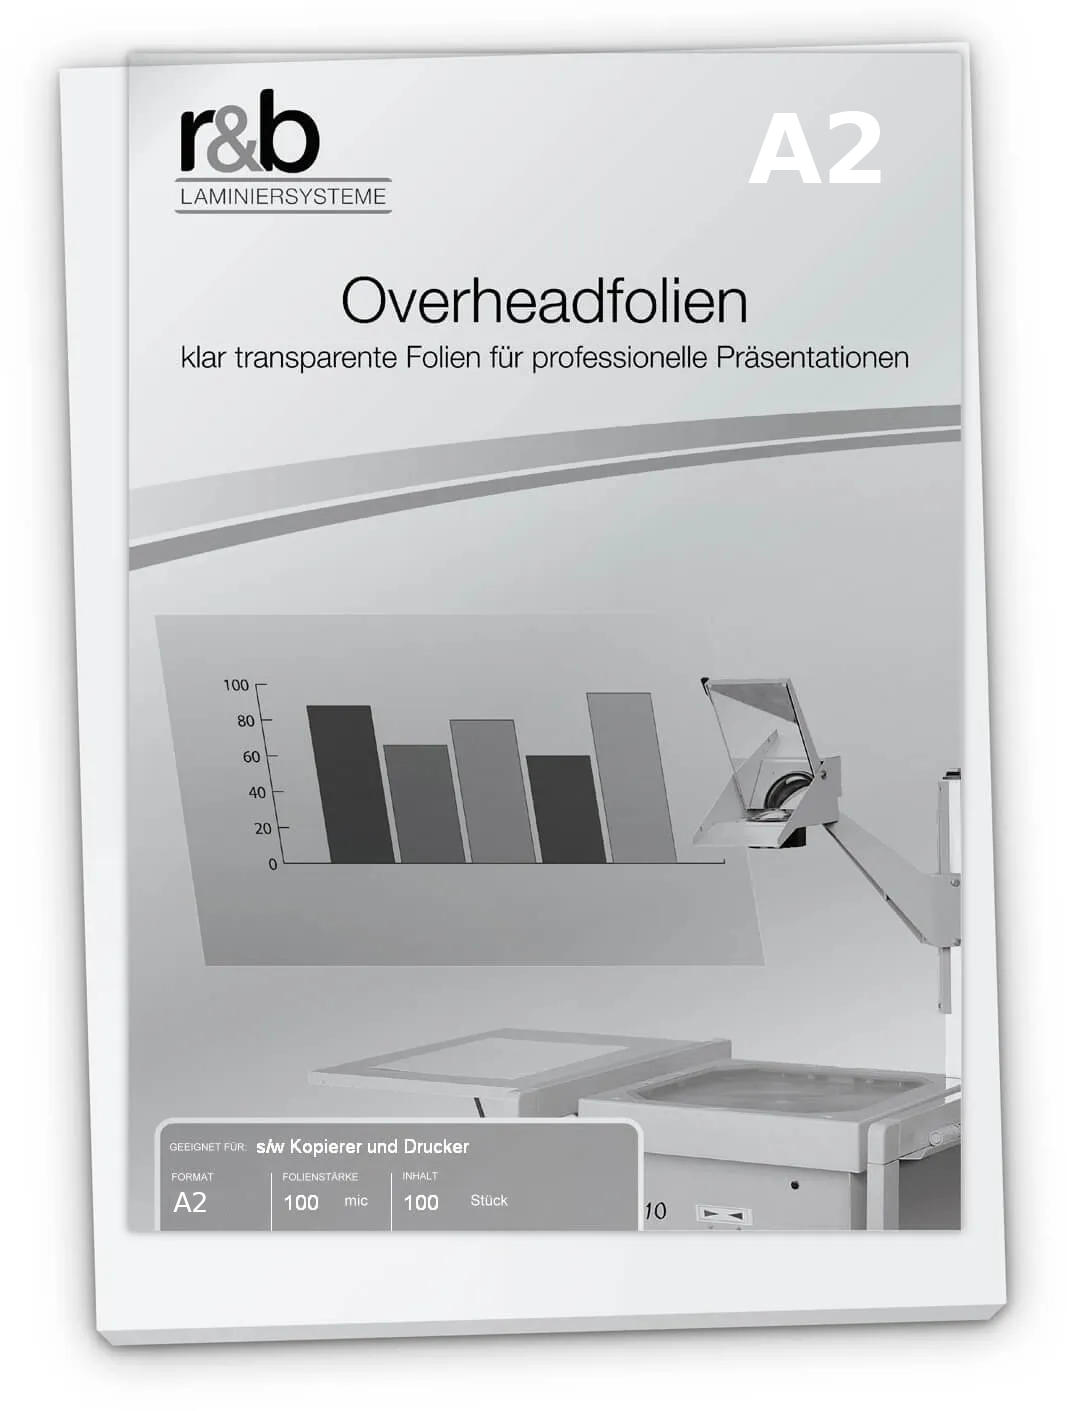 Overheadfolie s/w Kopierer und Drucker DIN A2, 100mic (100 Stück)